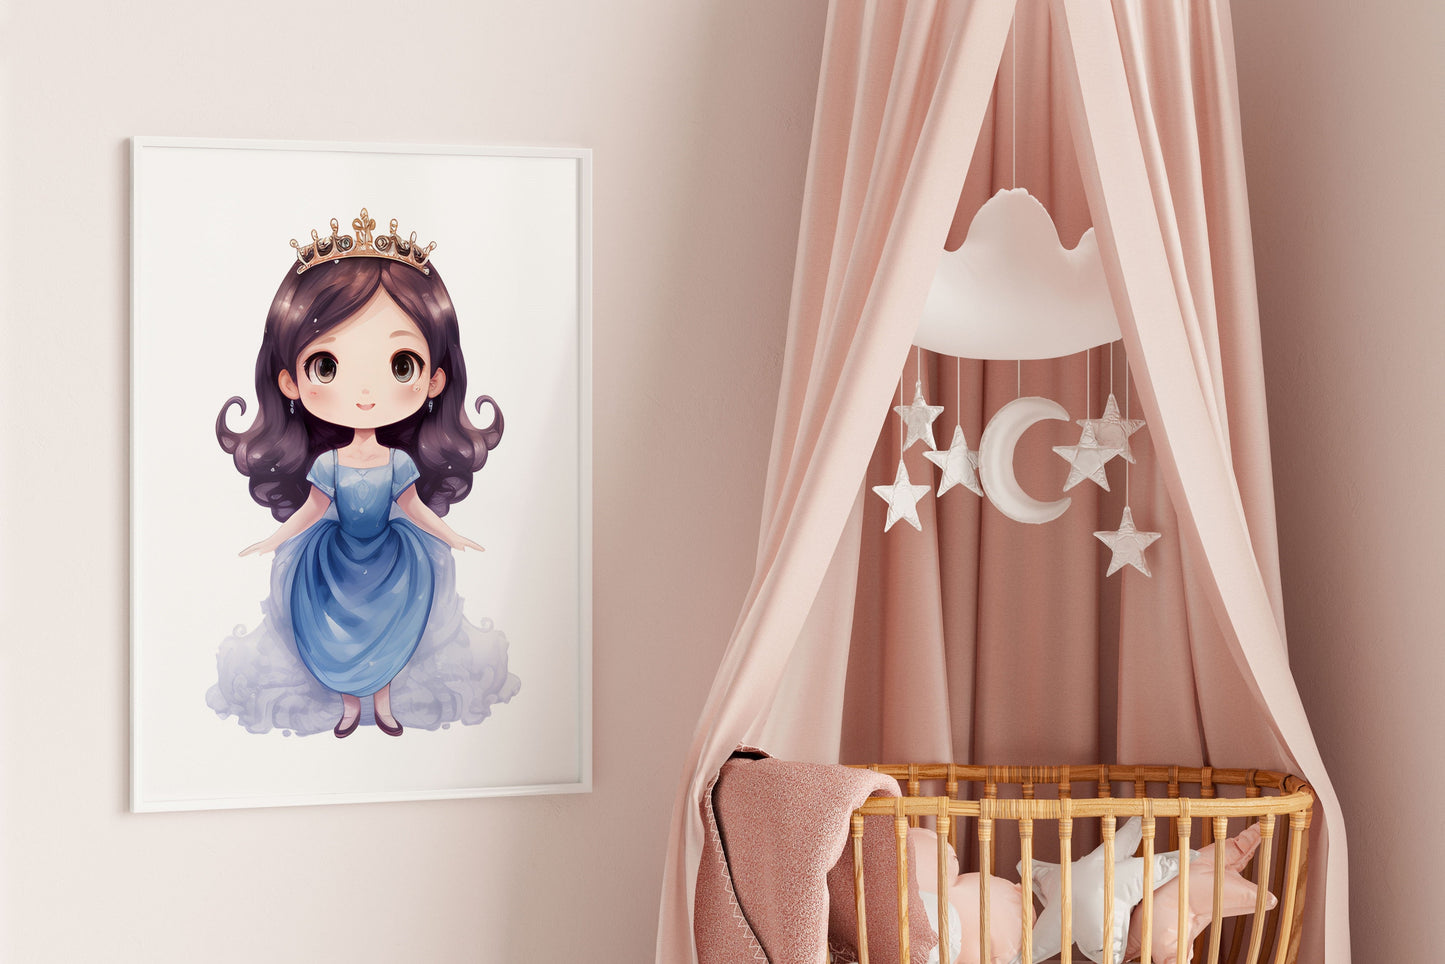 Cute Princess Dolls PNG Cliparts - Digital Artwork - Mama Life Printables